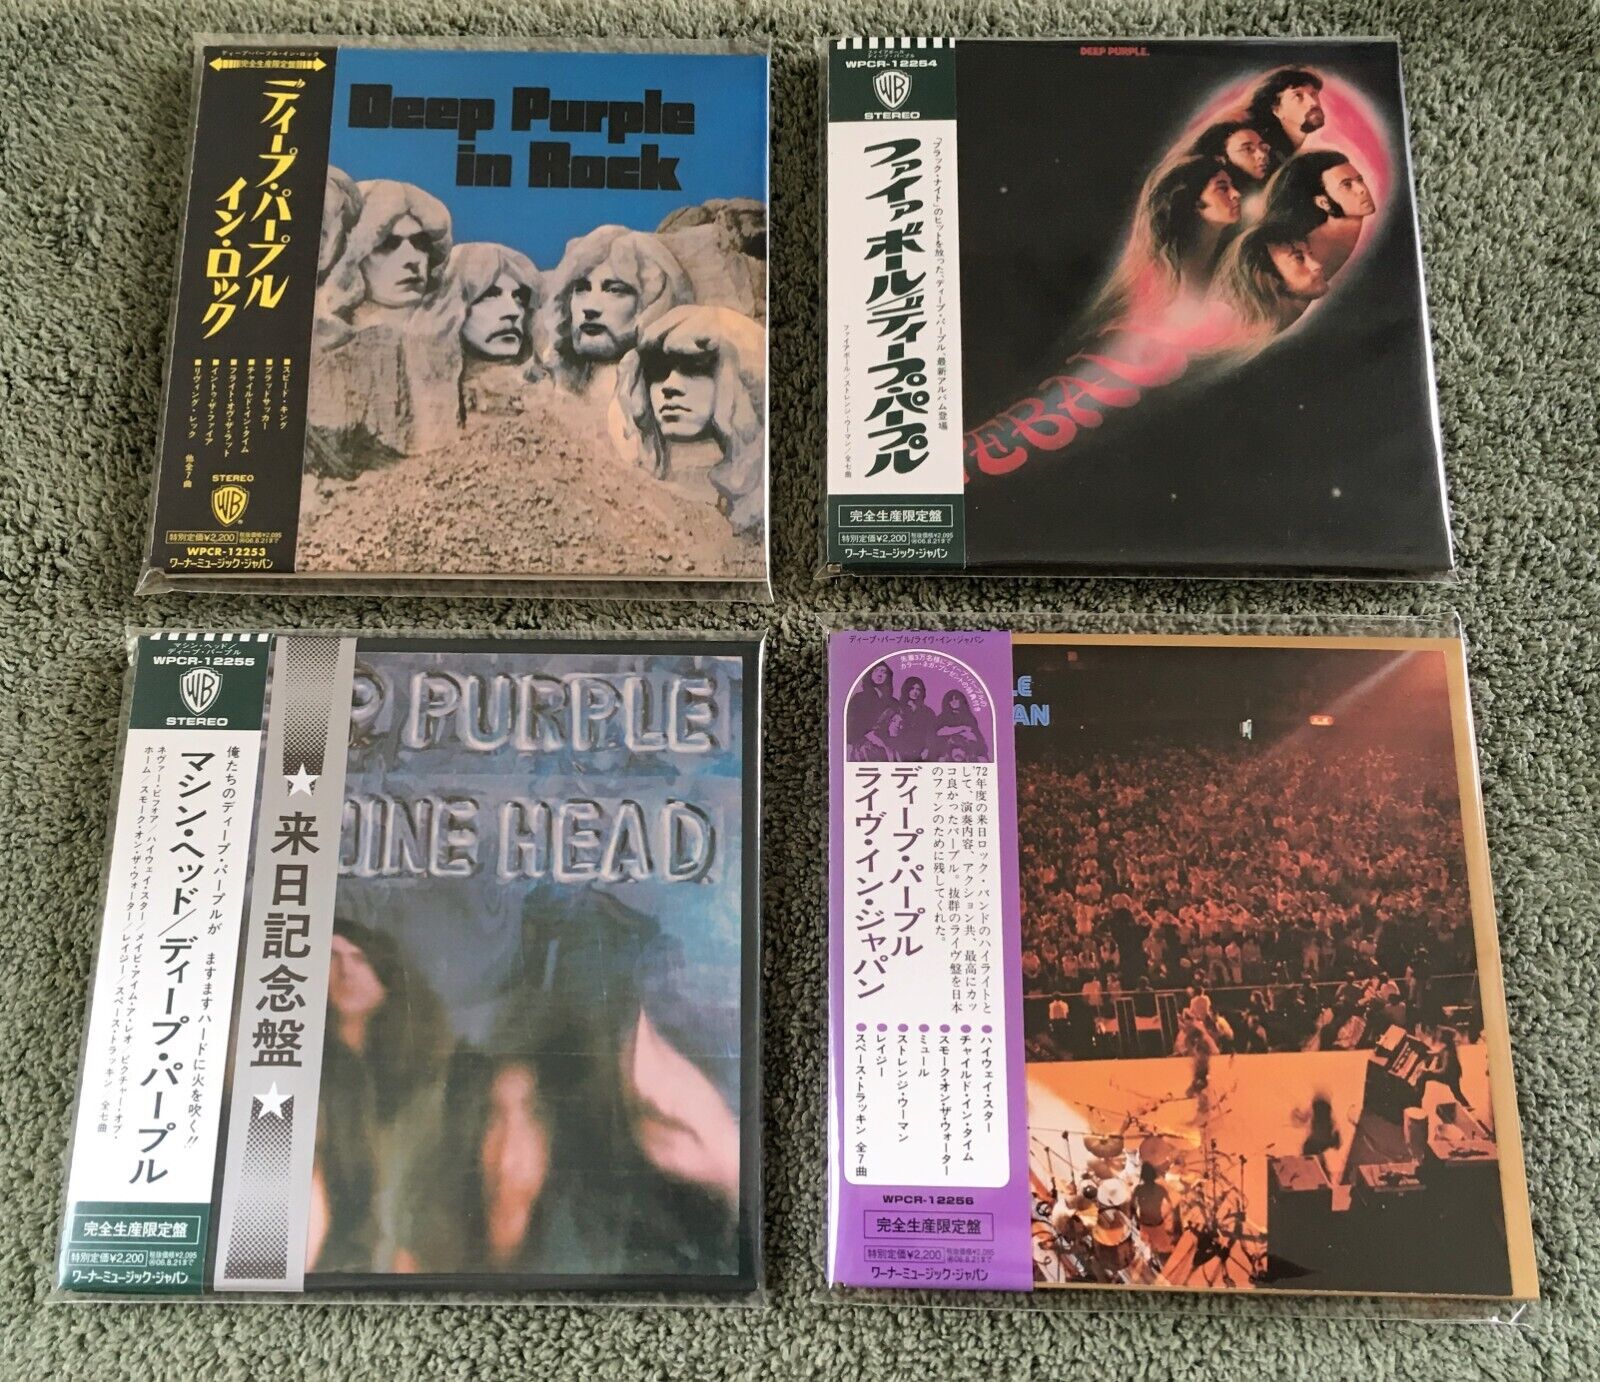 Deep Purple * Japan Mini LP CD  4 Title Set * Replica Sleeve * Ritchie Blackmore